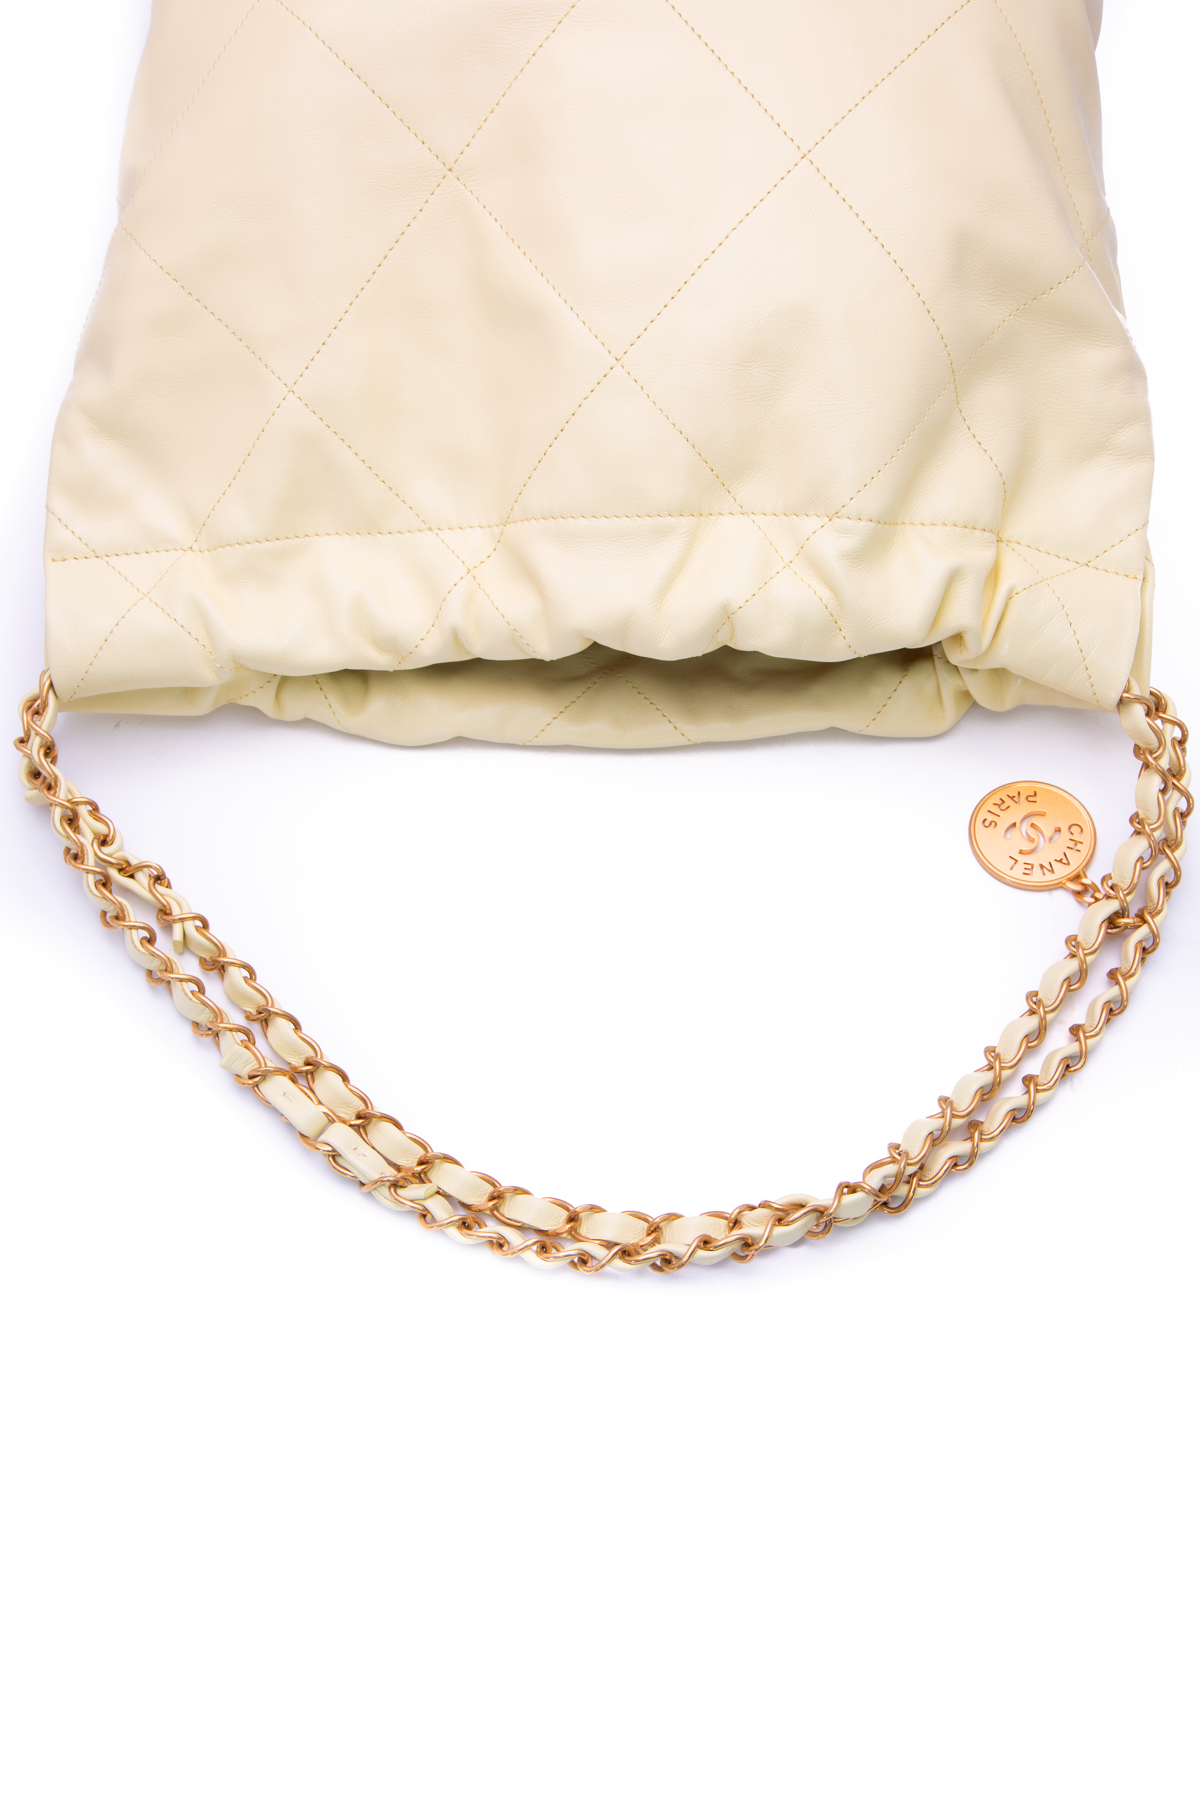 Chanel 22 Mini Handbag Light Yellow / Other Materials